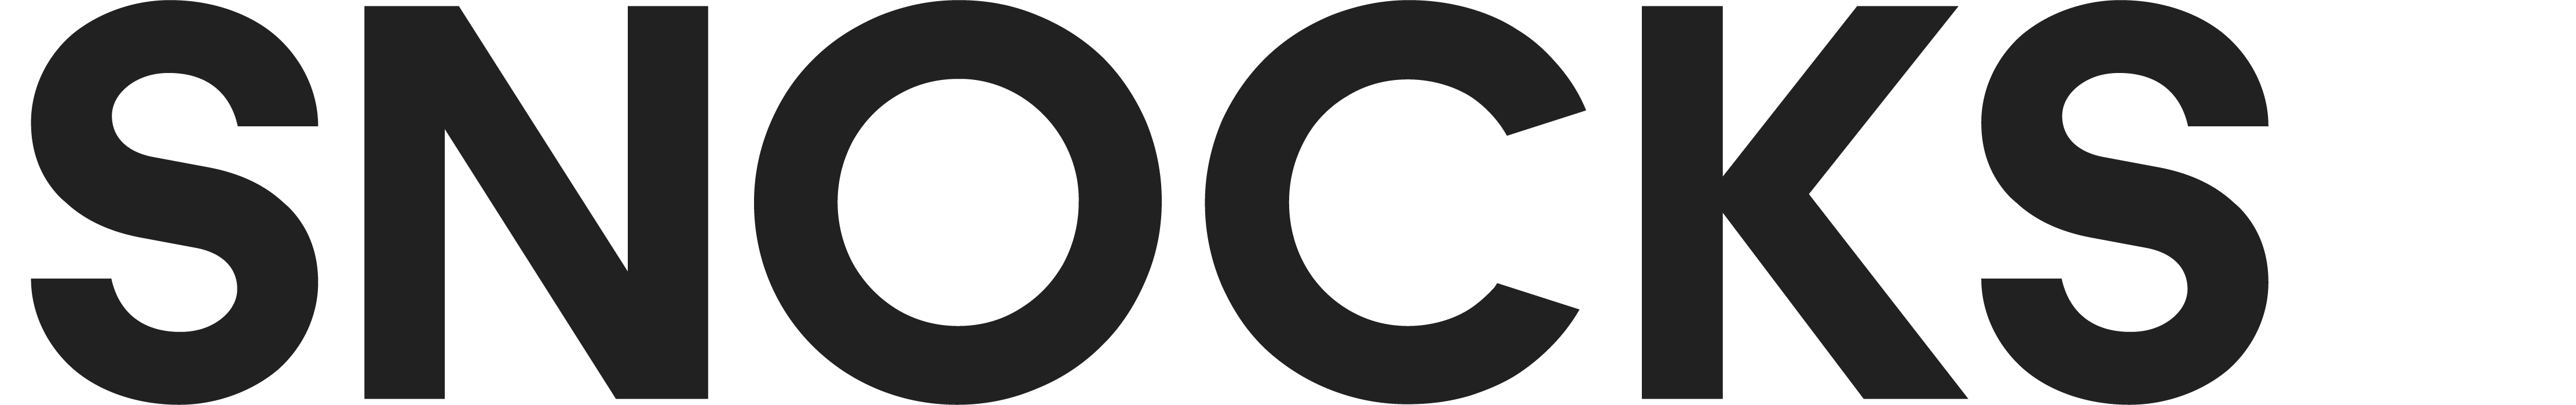 Snocks-logo